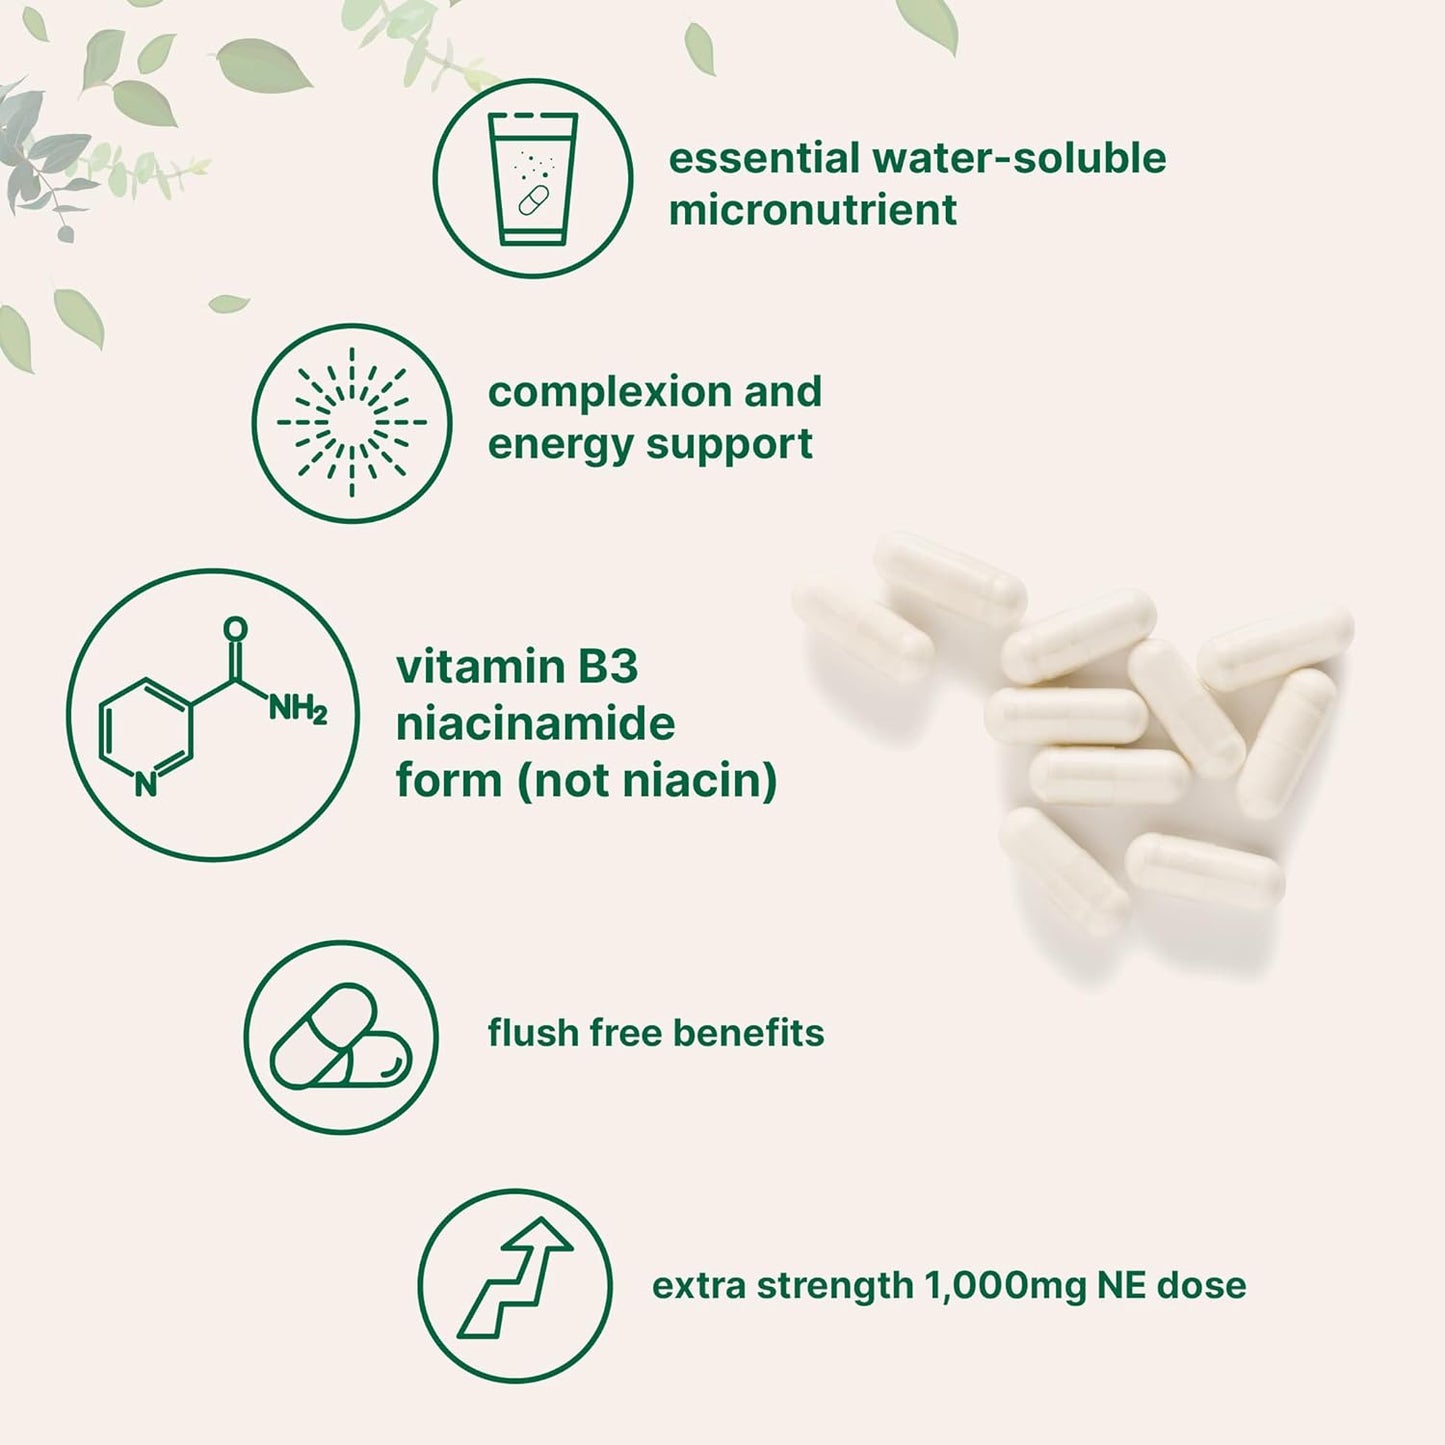 Vitamin B3 Nicotinamide 1,000Mg per Serving, 400 Capsules | Flush Free Niacin, Essential B Vitamin Supplement | Skin Care Health & Energy Support | Non-Gmo, Gluten Free